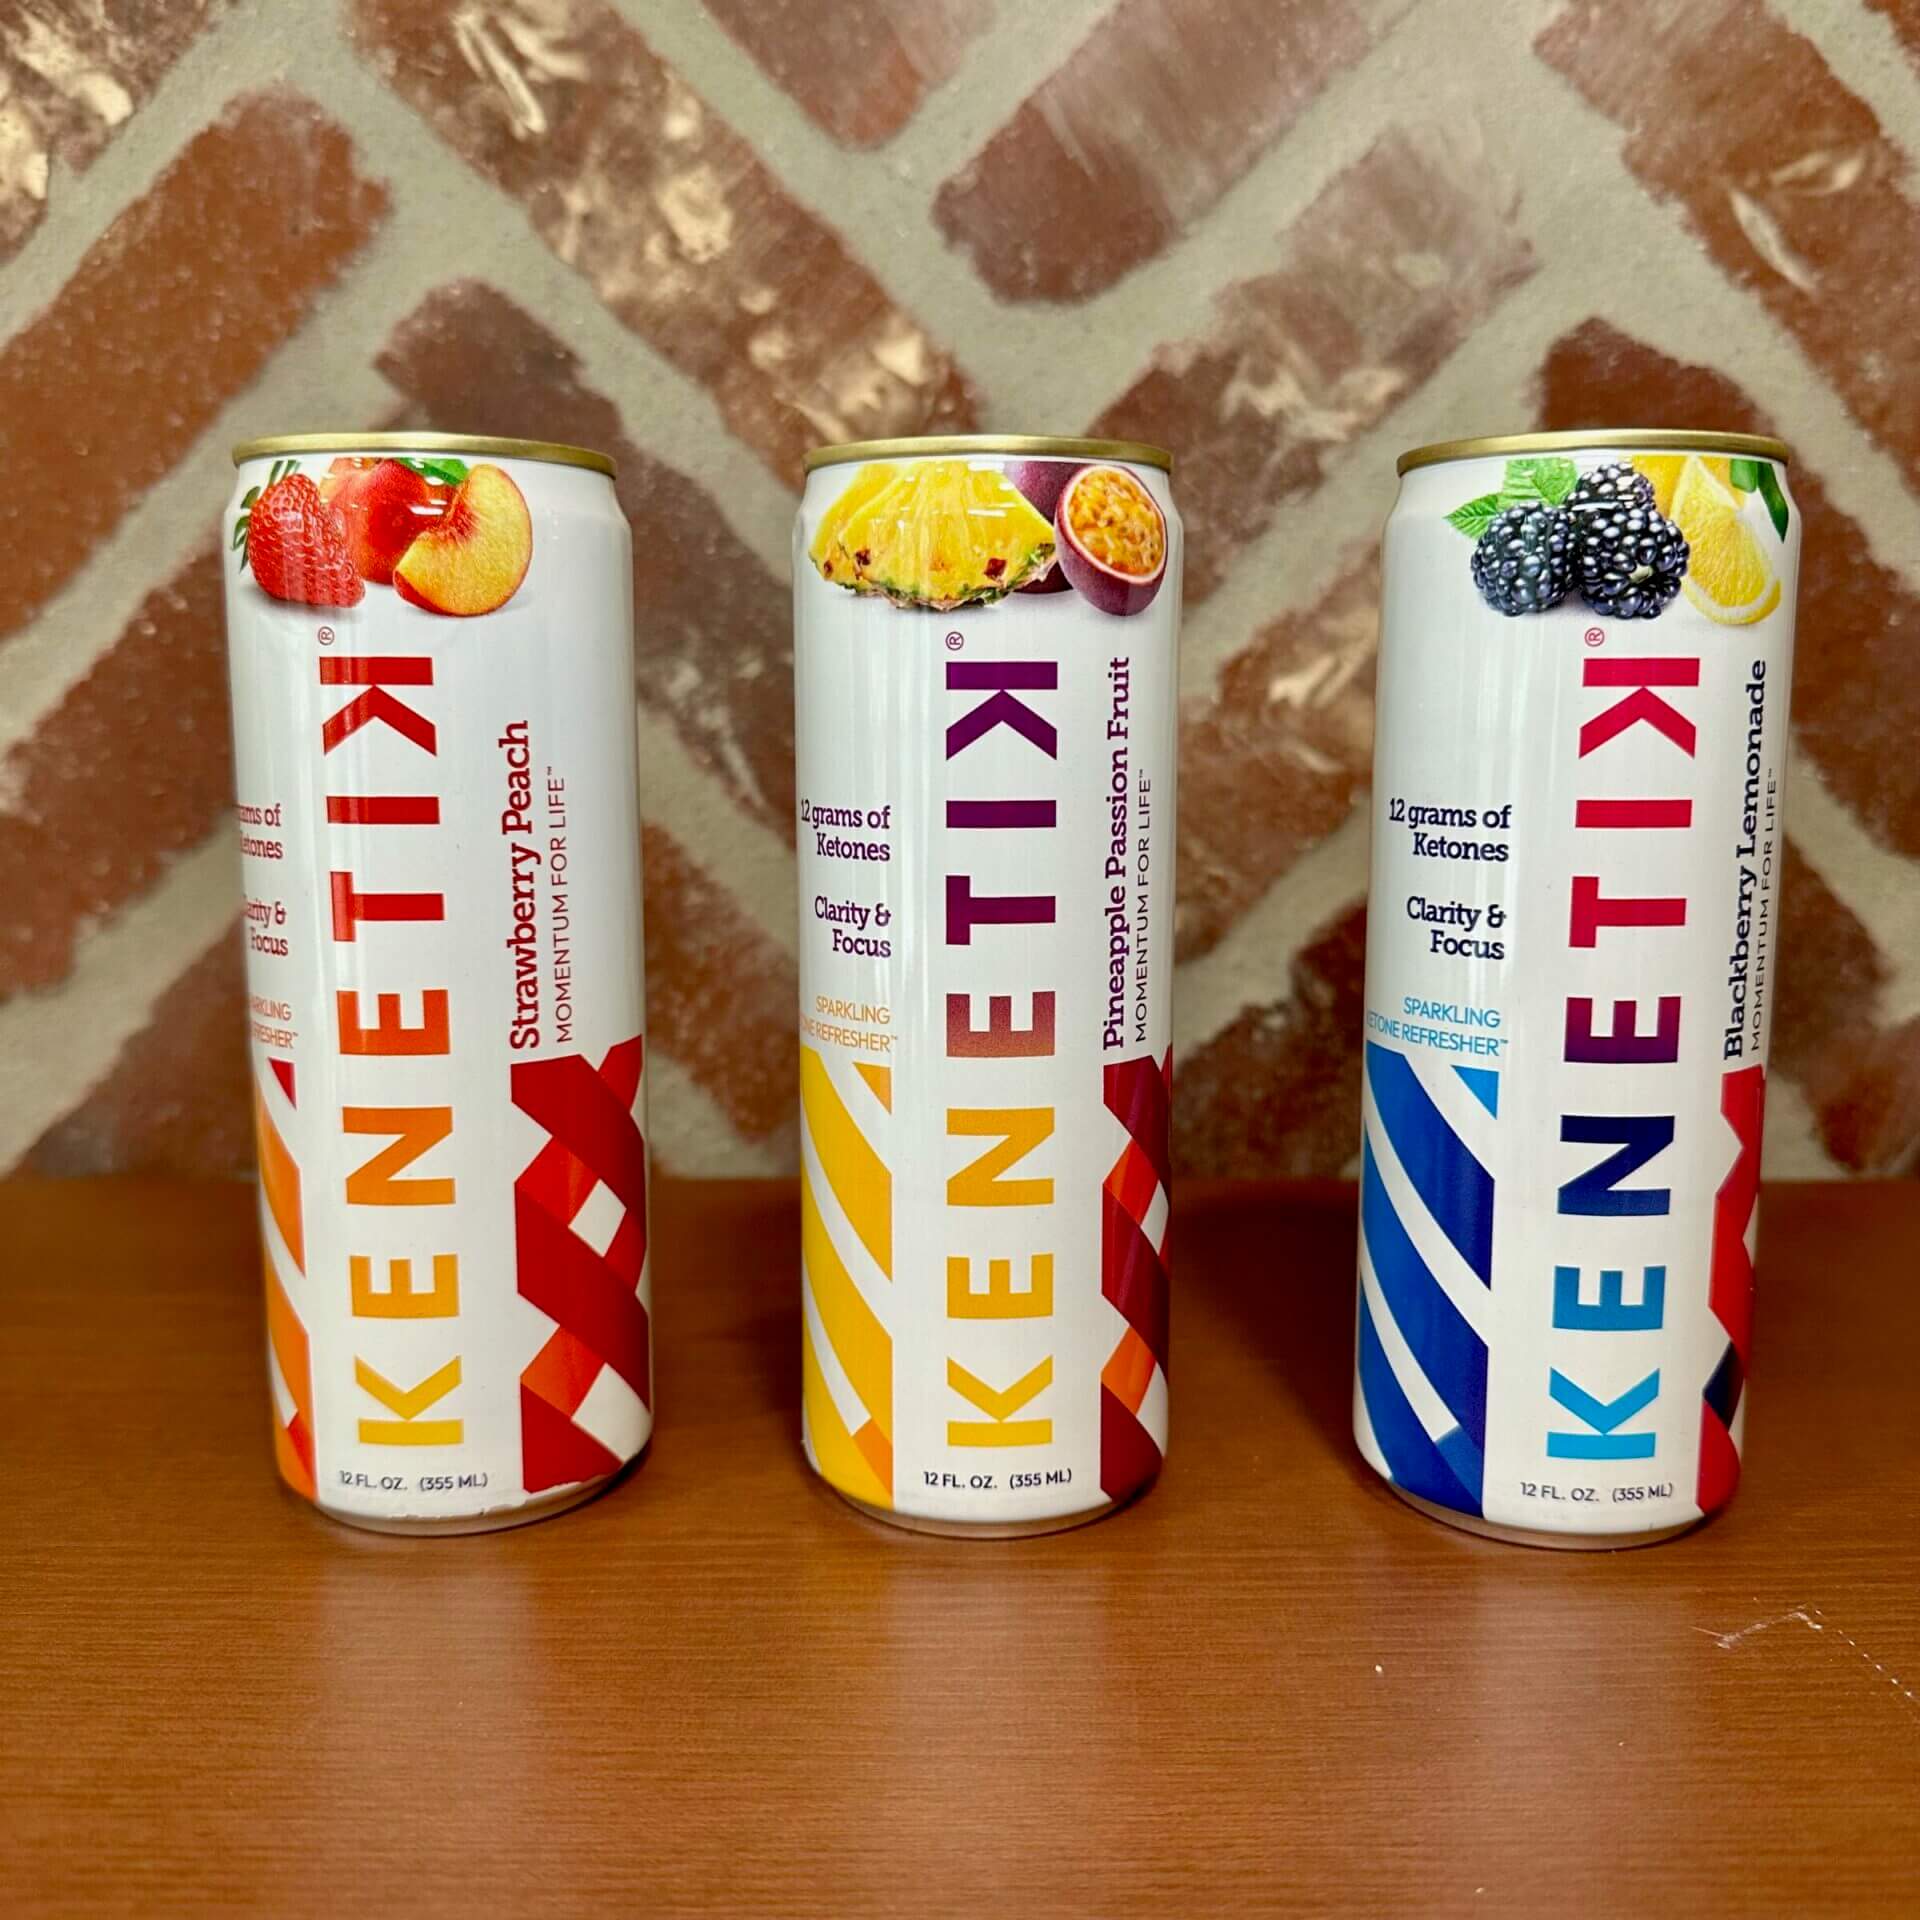 Kenetik offers the best tasting ketone drink I’ve ever tried.